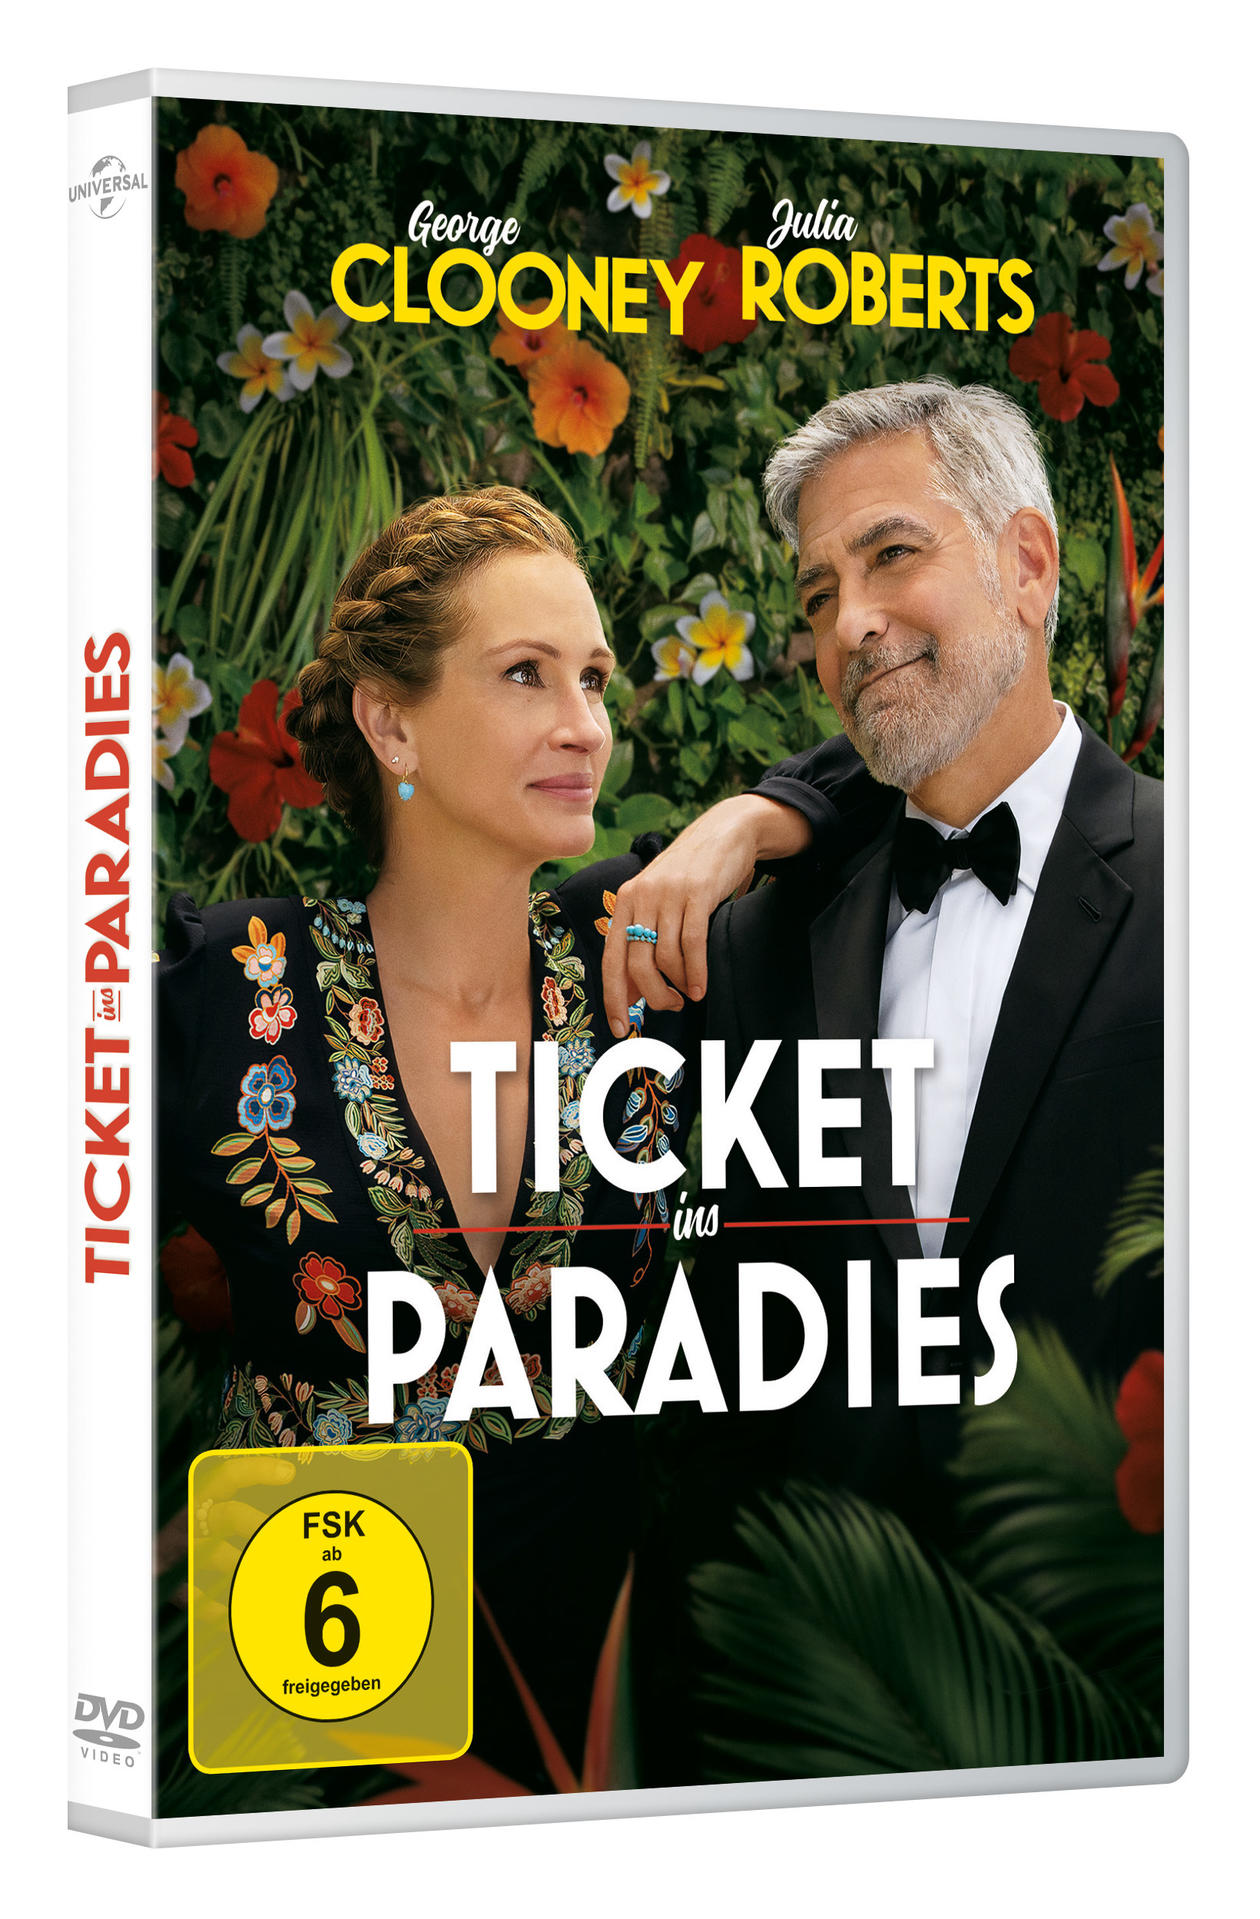 Paradies Ticket ins DVD